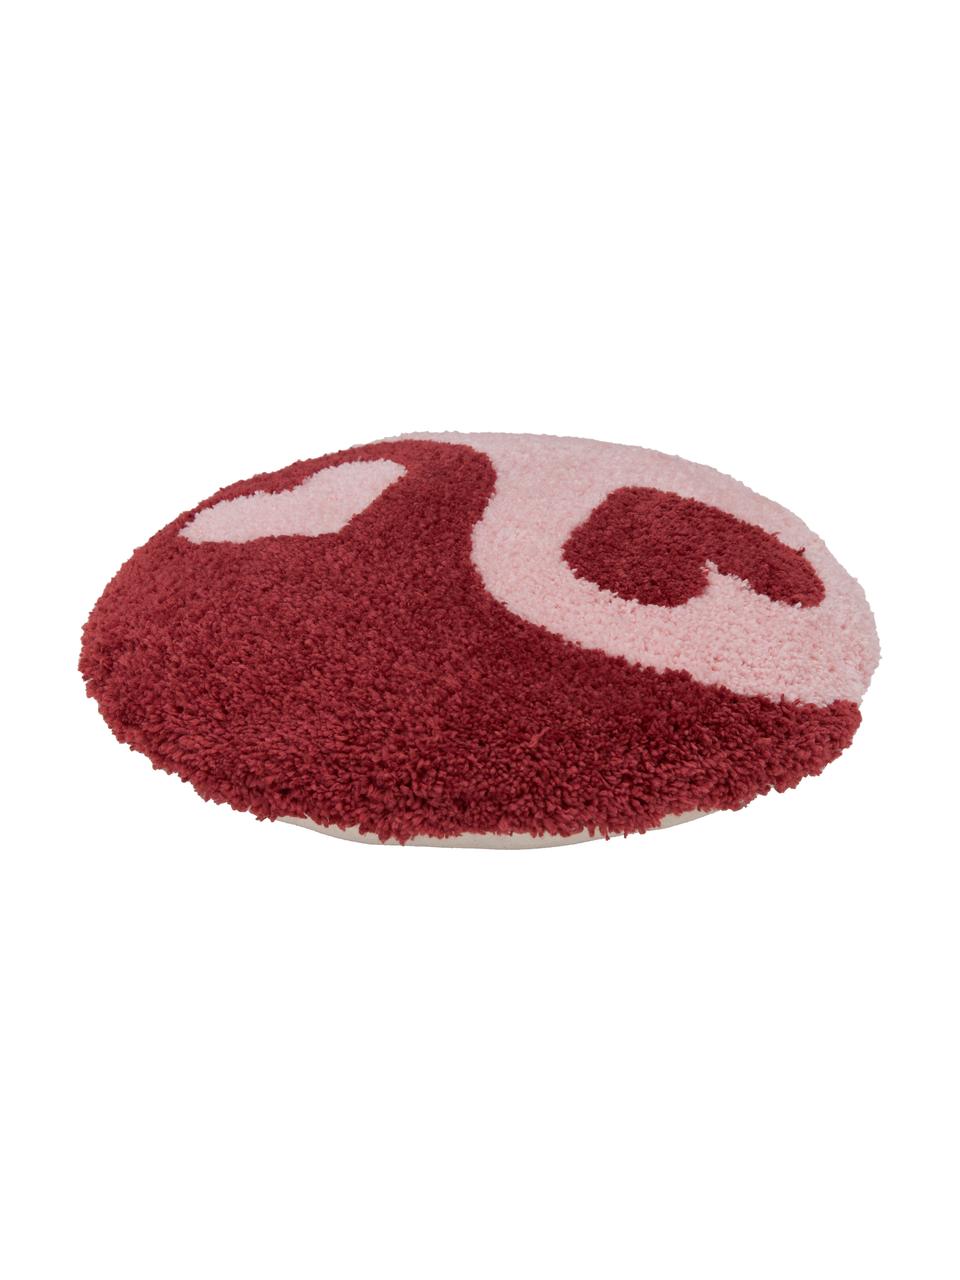 Cuscino rotondo soffice rosso/rosa Ariel, Rivestimento: 100% cotone, Rosso, rosa, Ø 35 cm